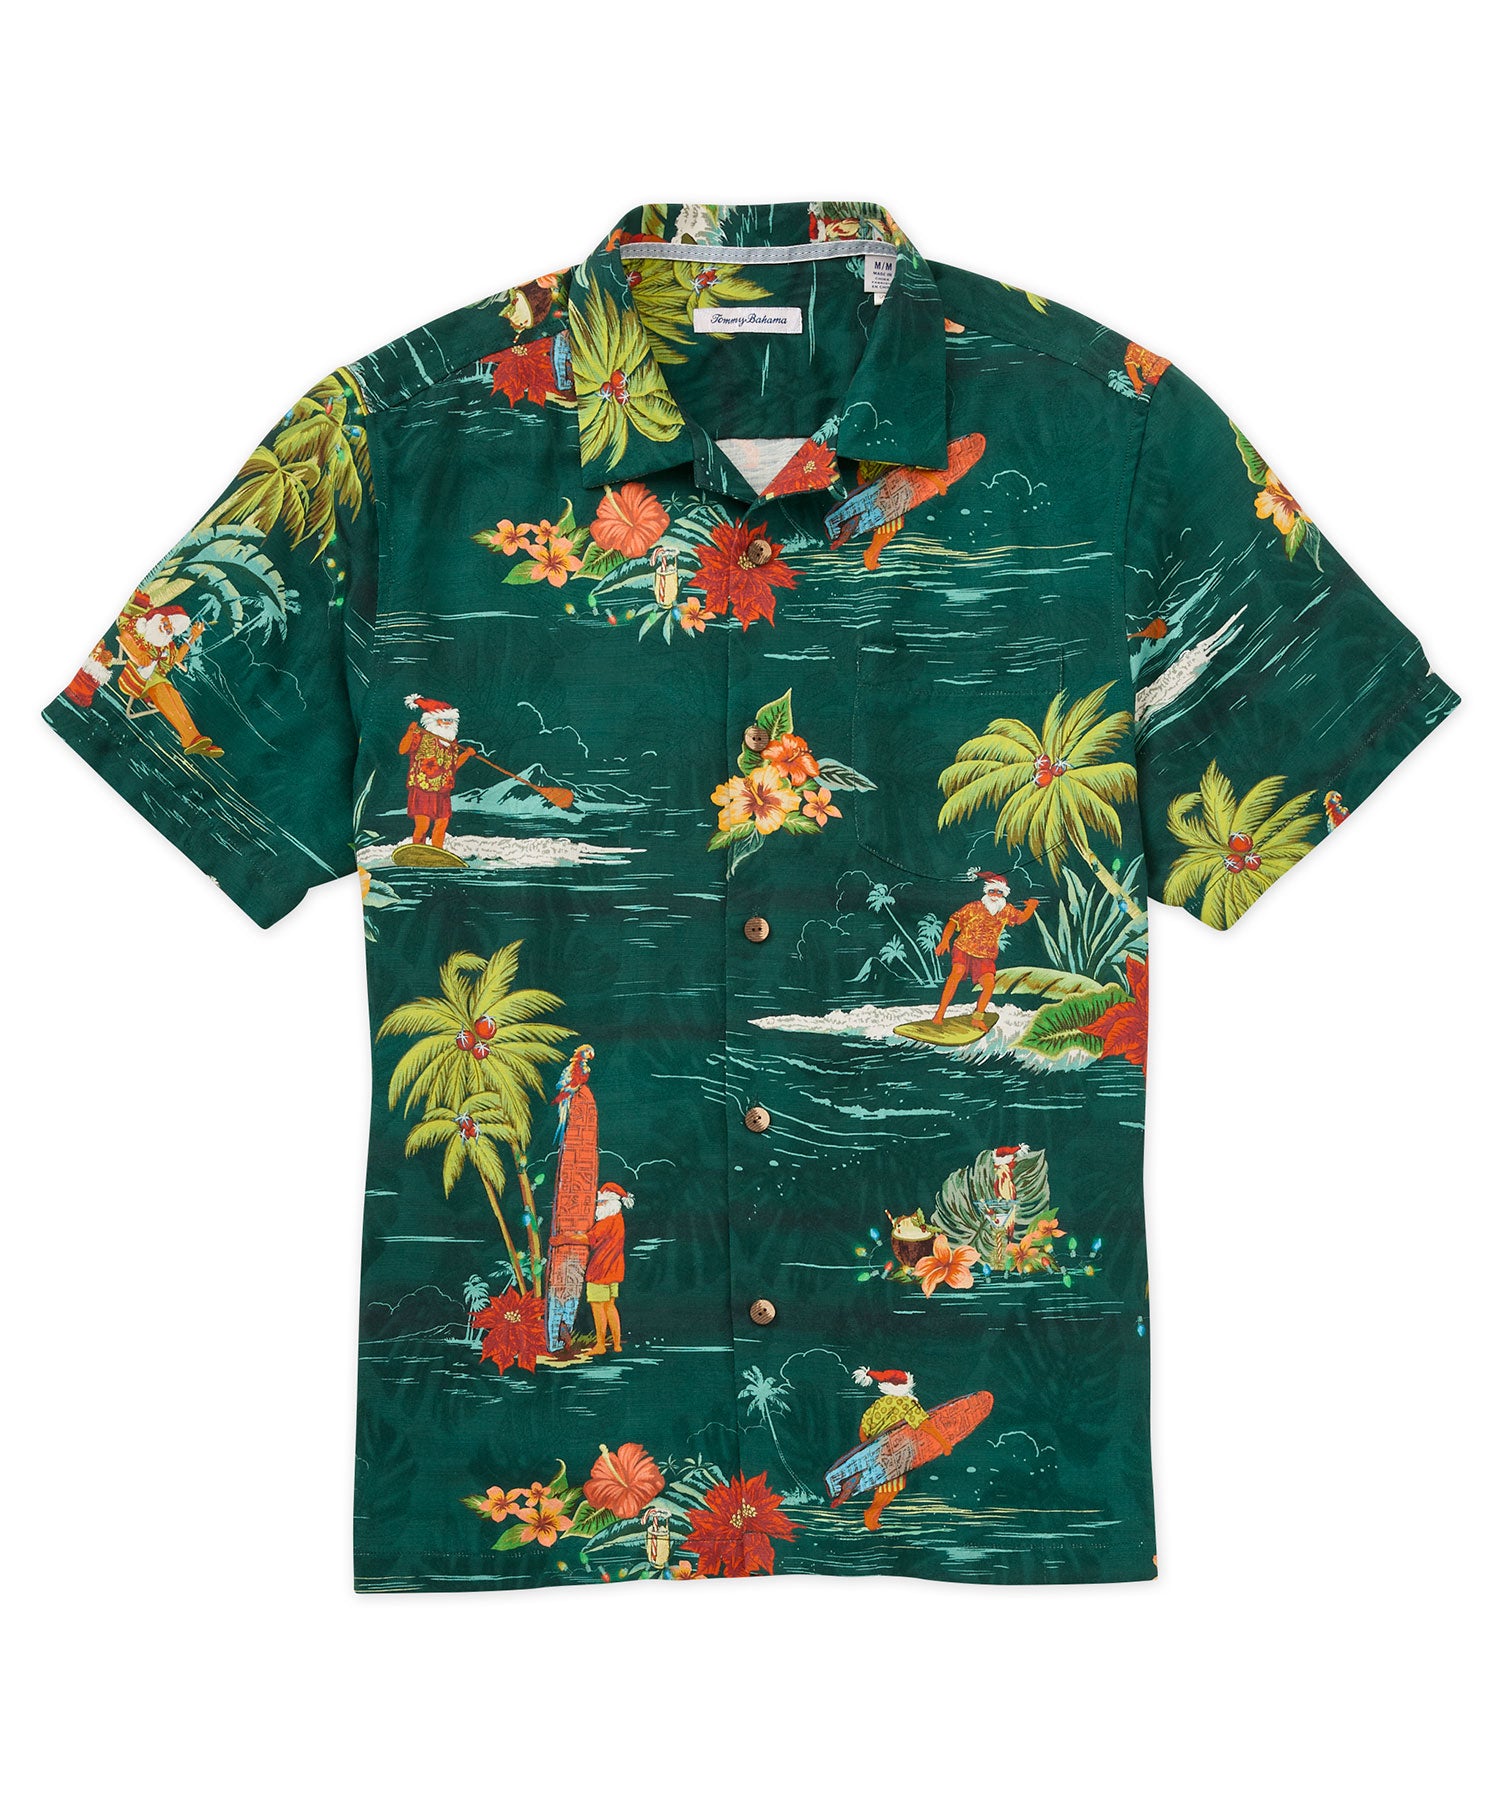 Men's Tommy Bahama Short Sleeve Surf's Up Sport Shirt - Botanical Garden - Size LT